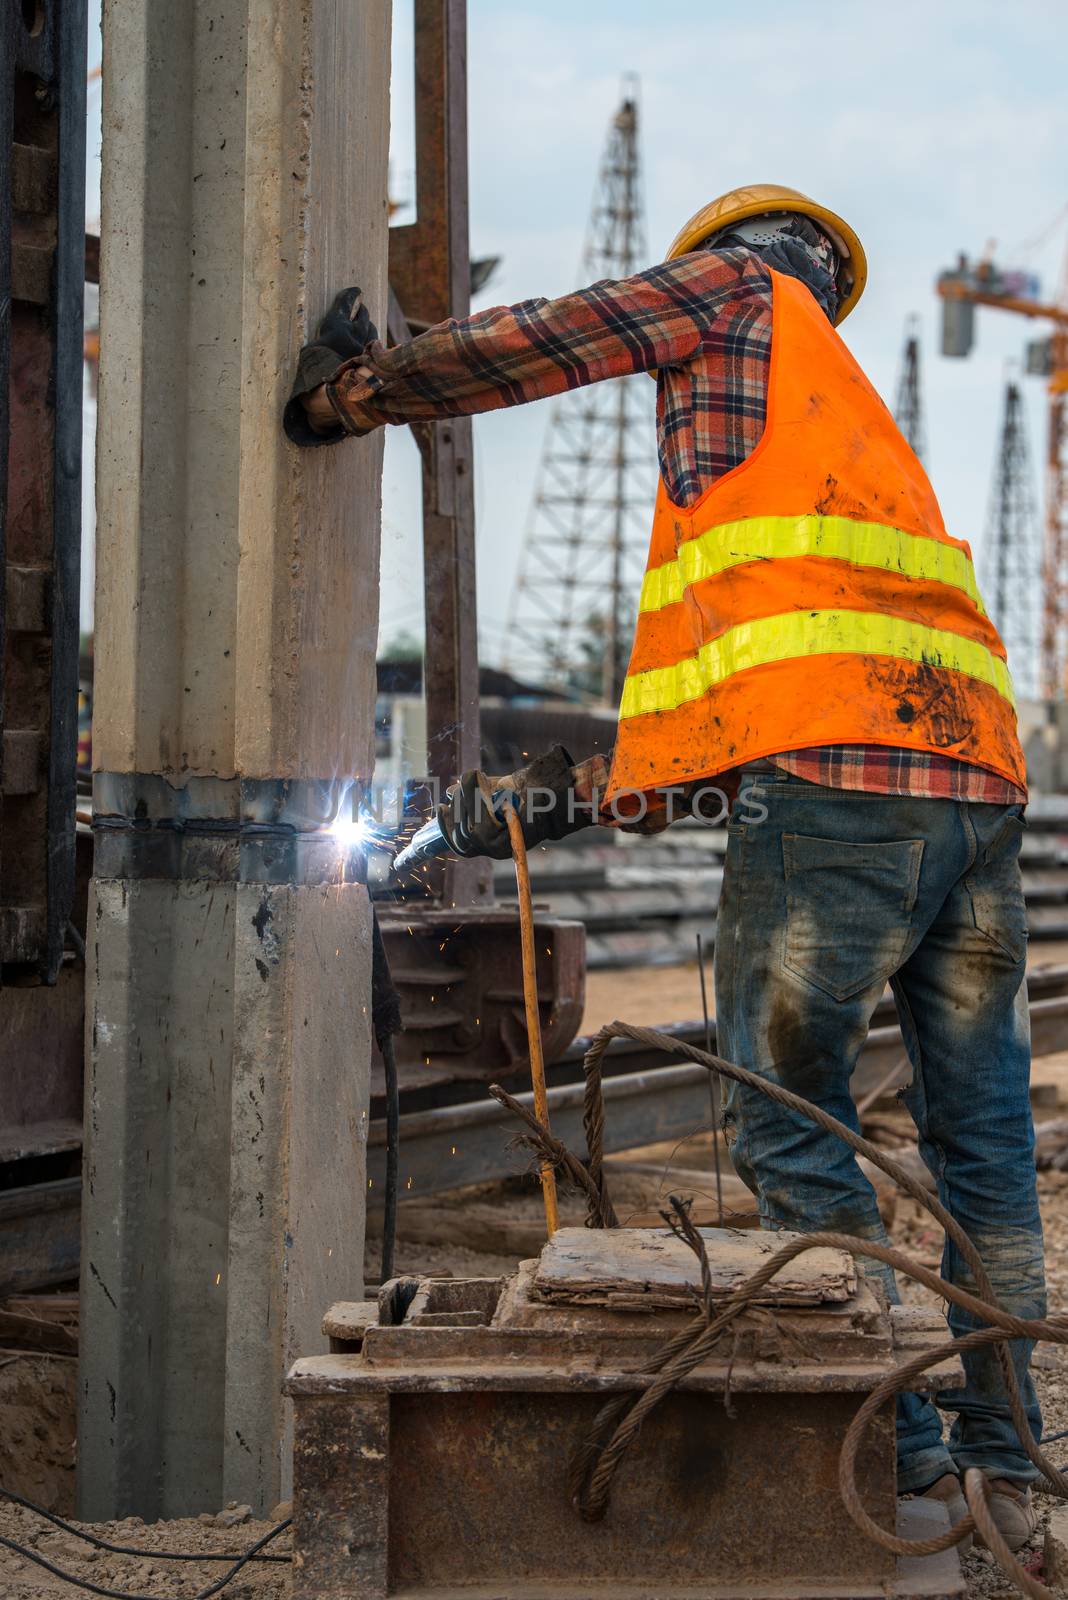 welder at construction site by antpkr